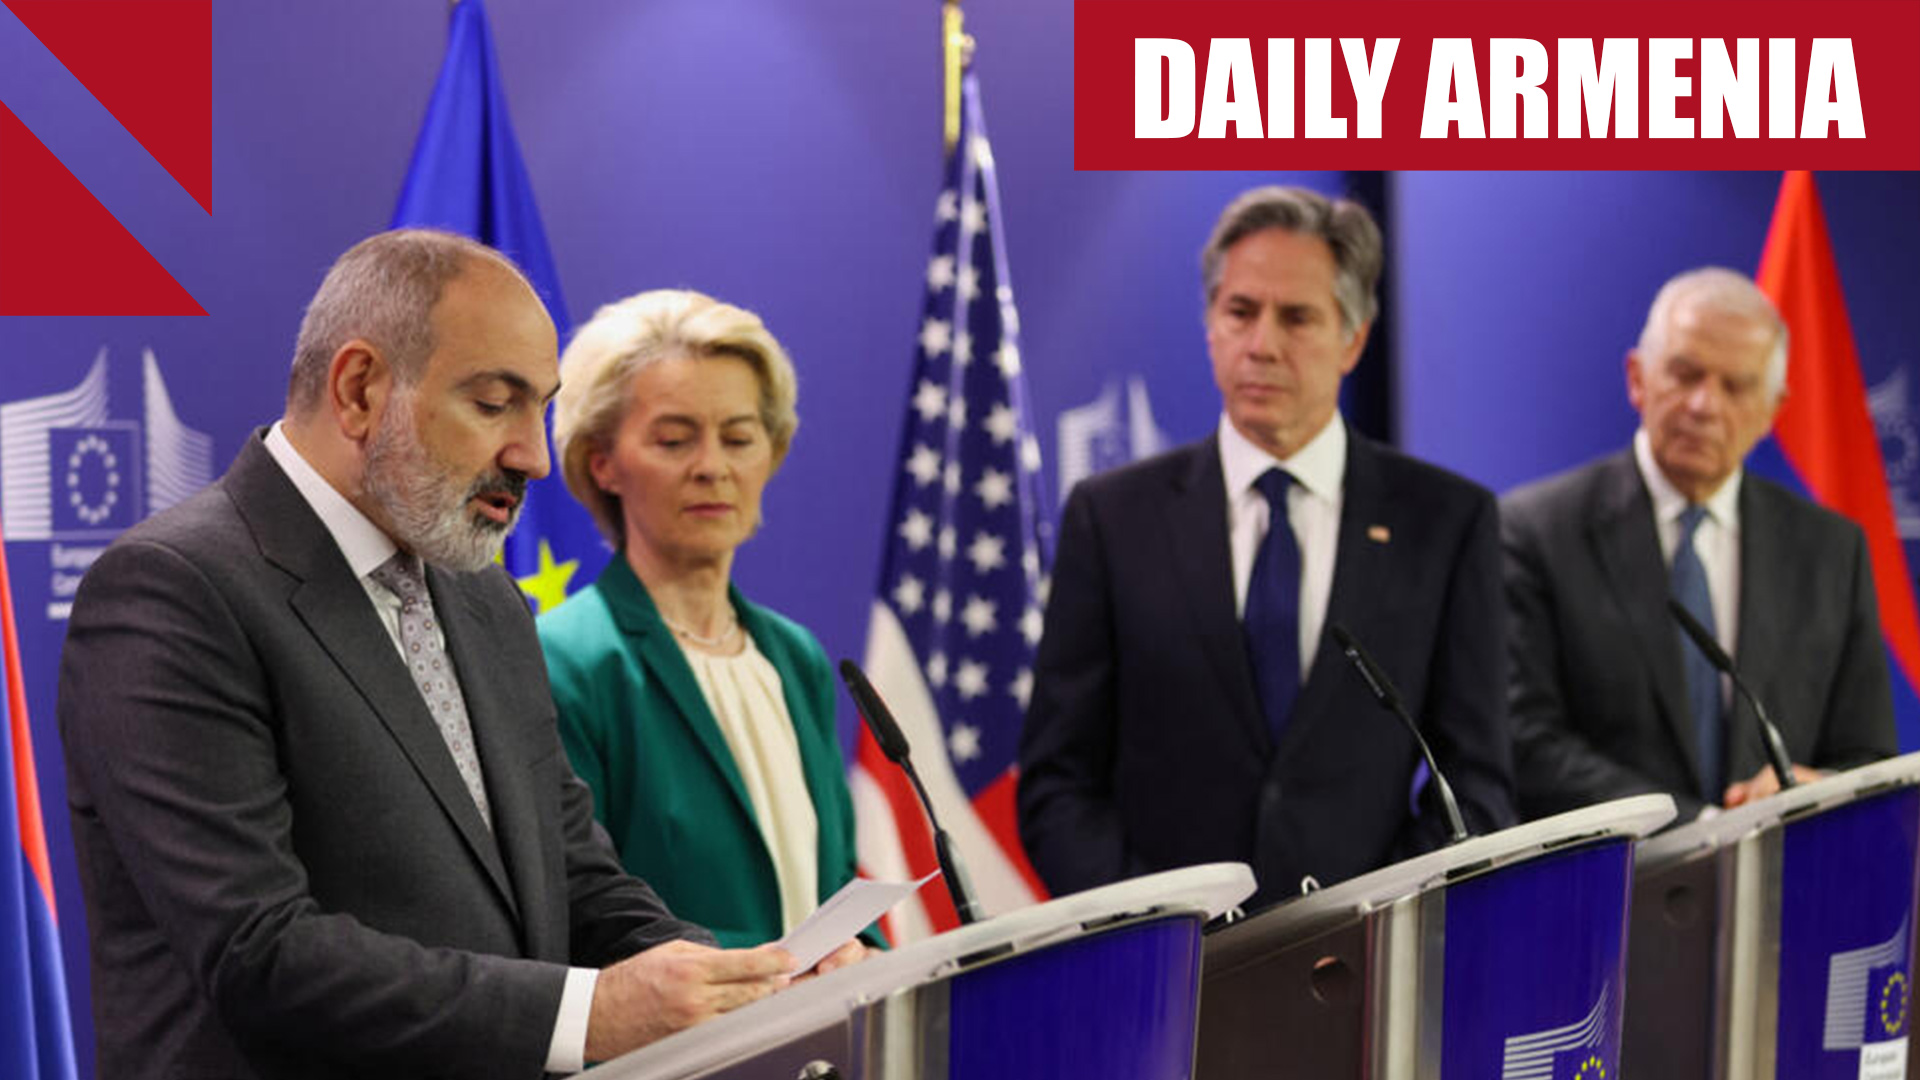 EU, US announce major financial aid programs for Armenia, Karabakh Armenians